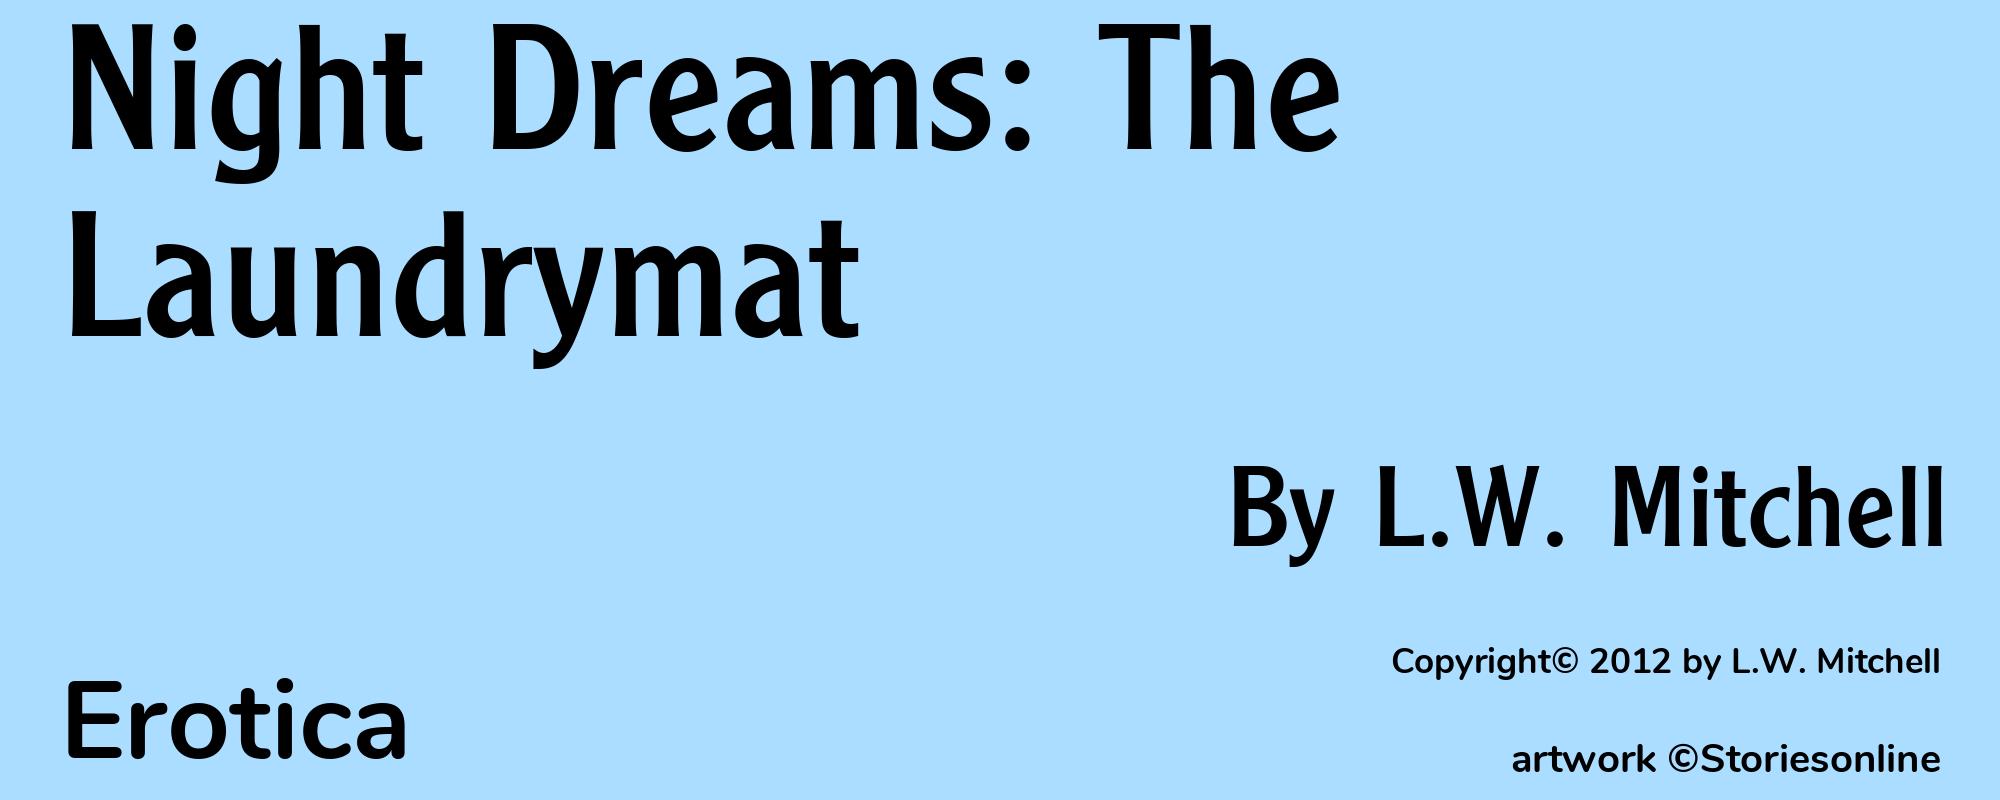 Night Dreams: The Laundrymat - Cover